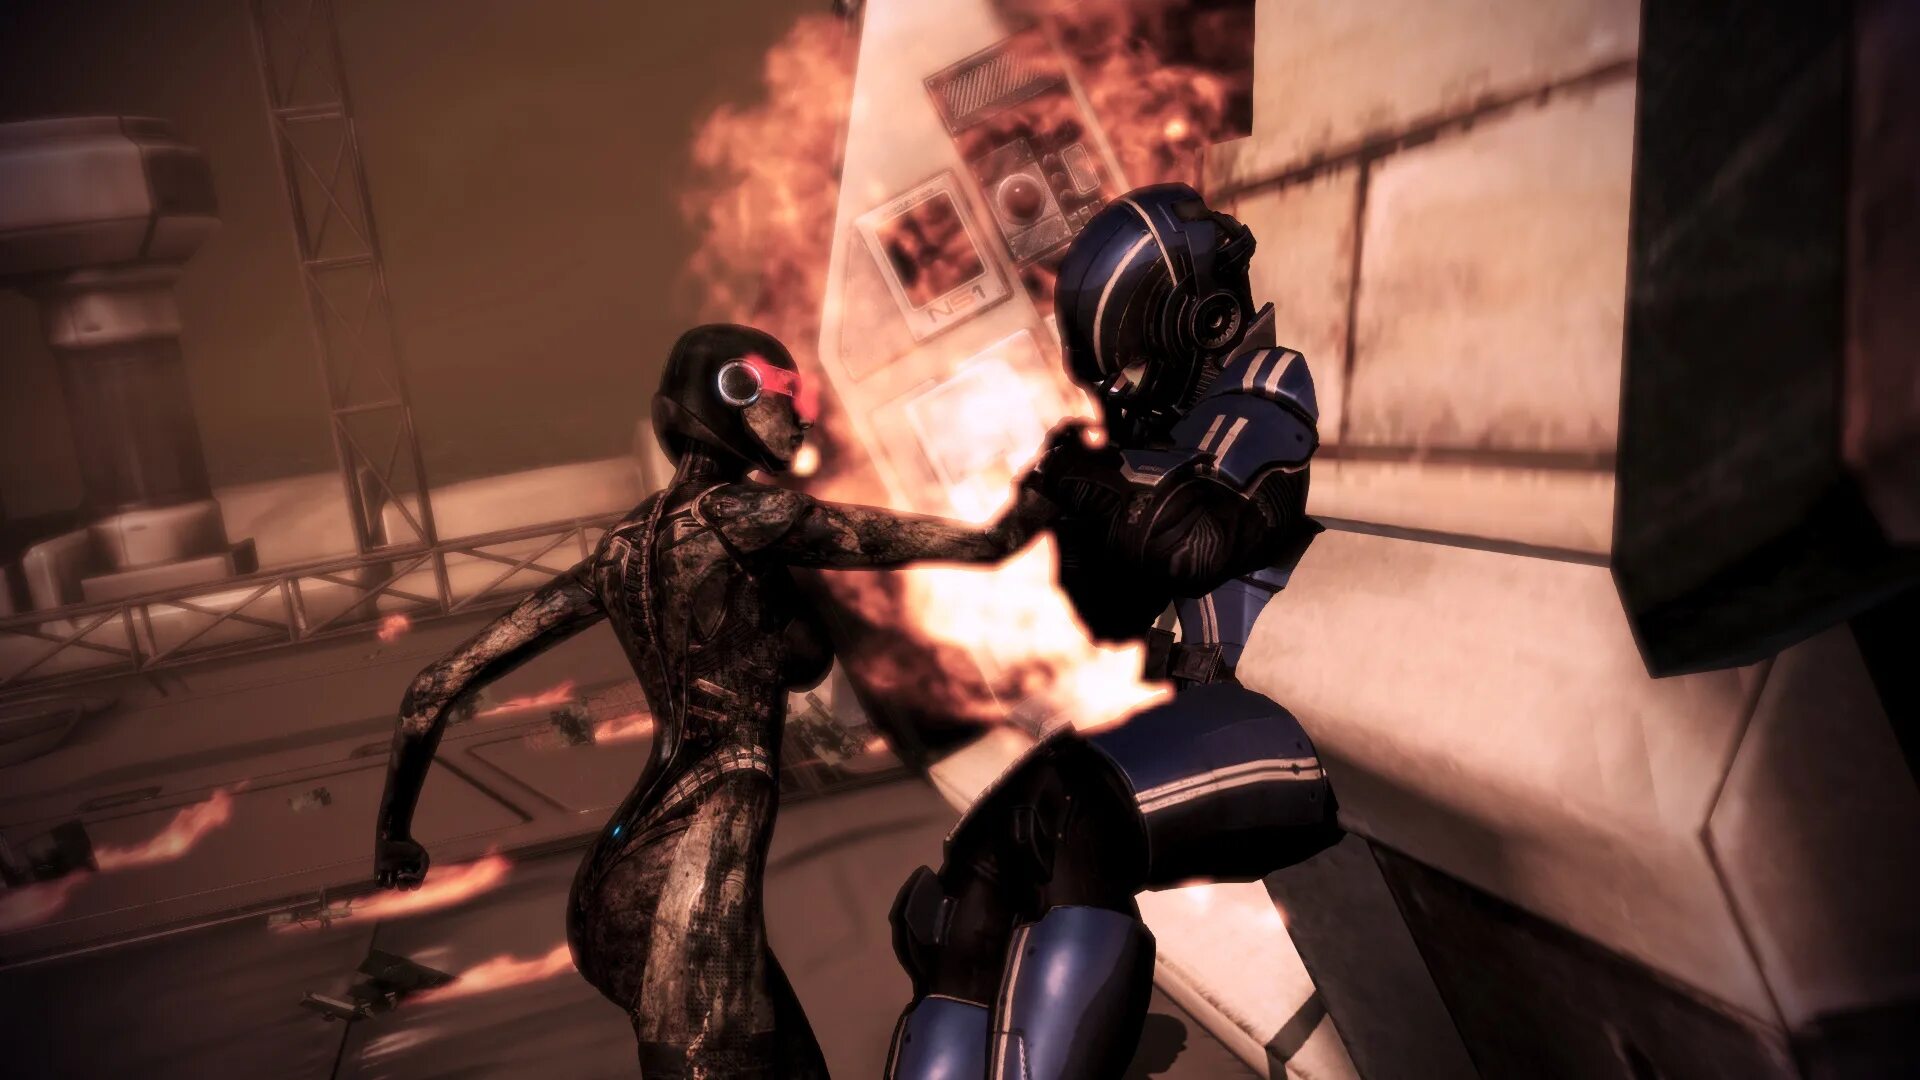 Сьюзи Mass Effect. Mass Effect сузи +18. Масс эффект противники. Масс эффект сузи костюм. Сузи гала